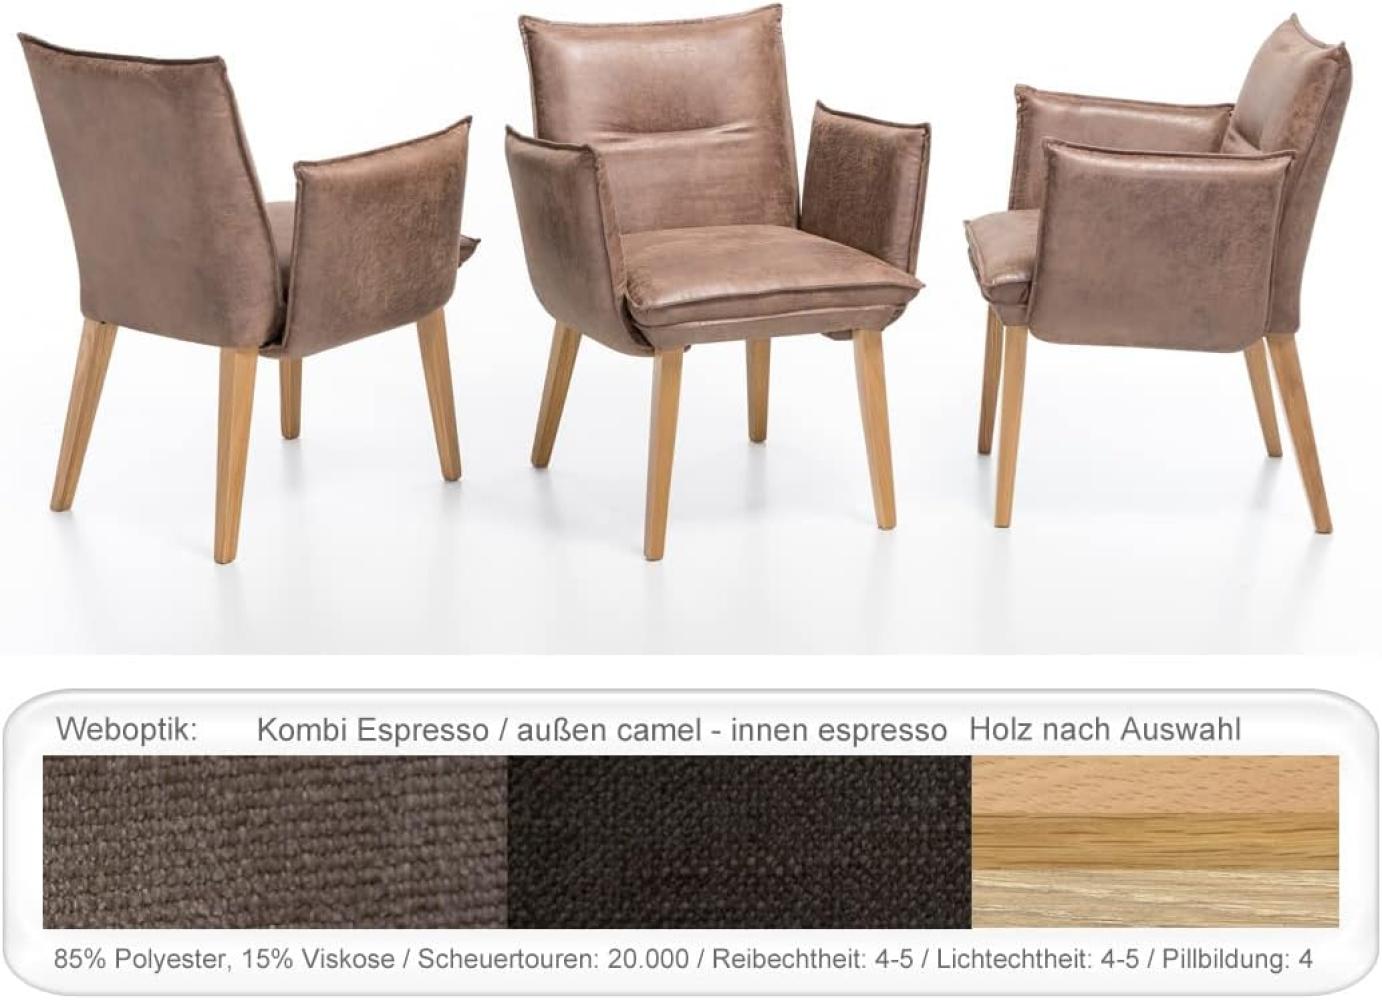 6x Sessel Gerit 2 Rücken mit Naht Polstersessel Esszimmer Massivholz Buche natur lackiert, Kombi Fleckless Espresso Bild 1